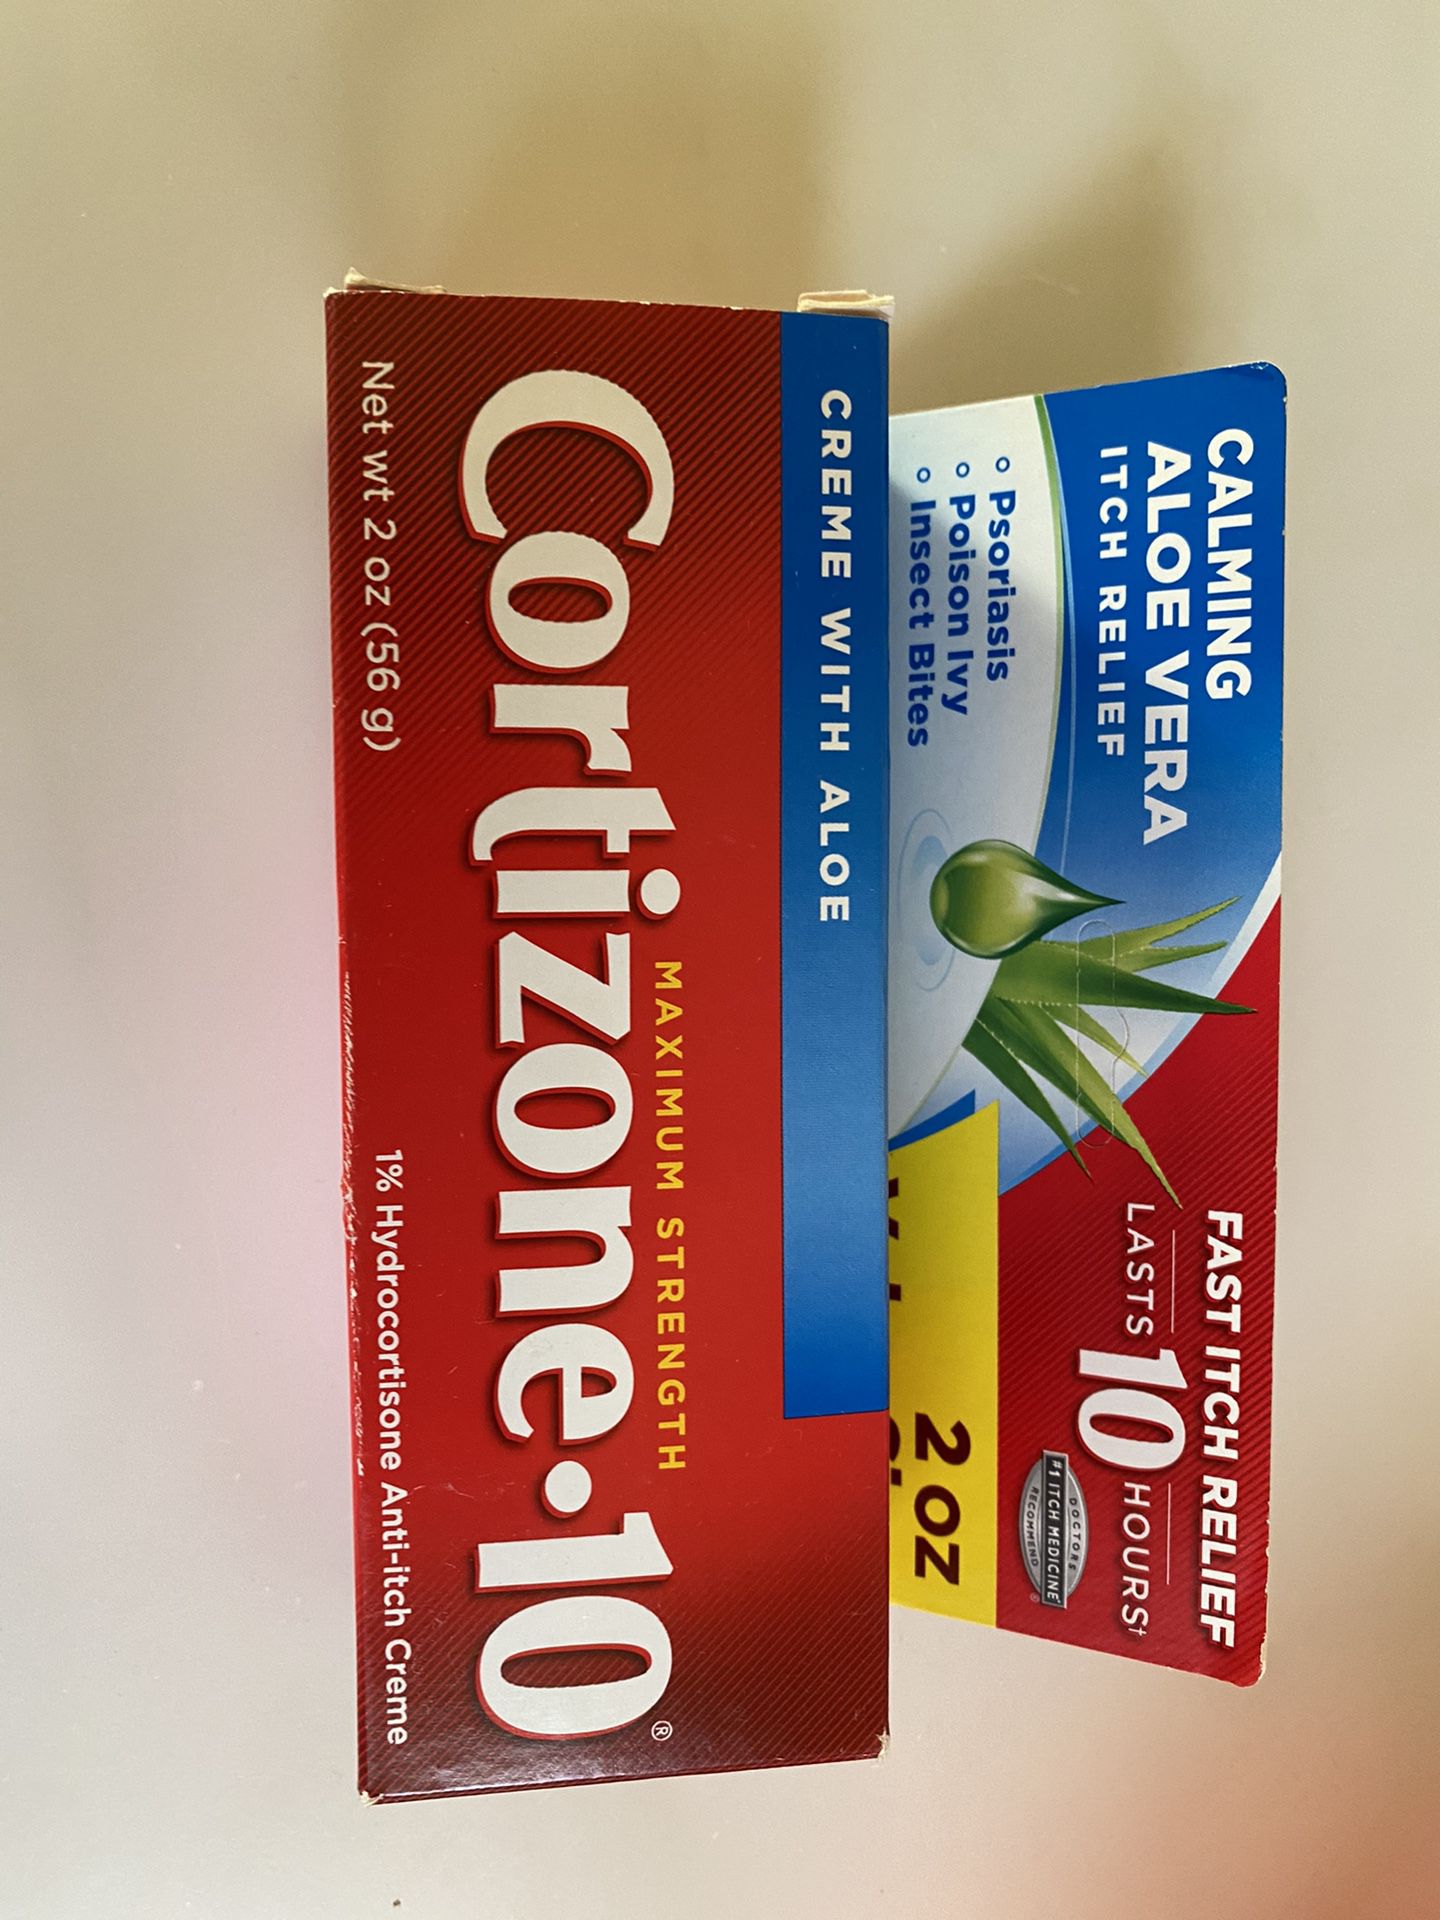 Cortizone Anti Itch Cream